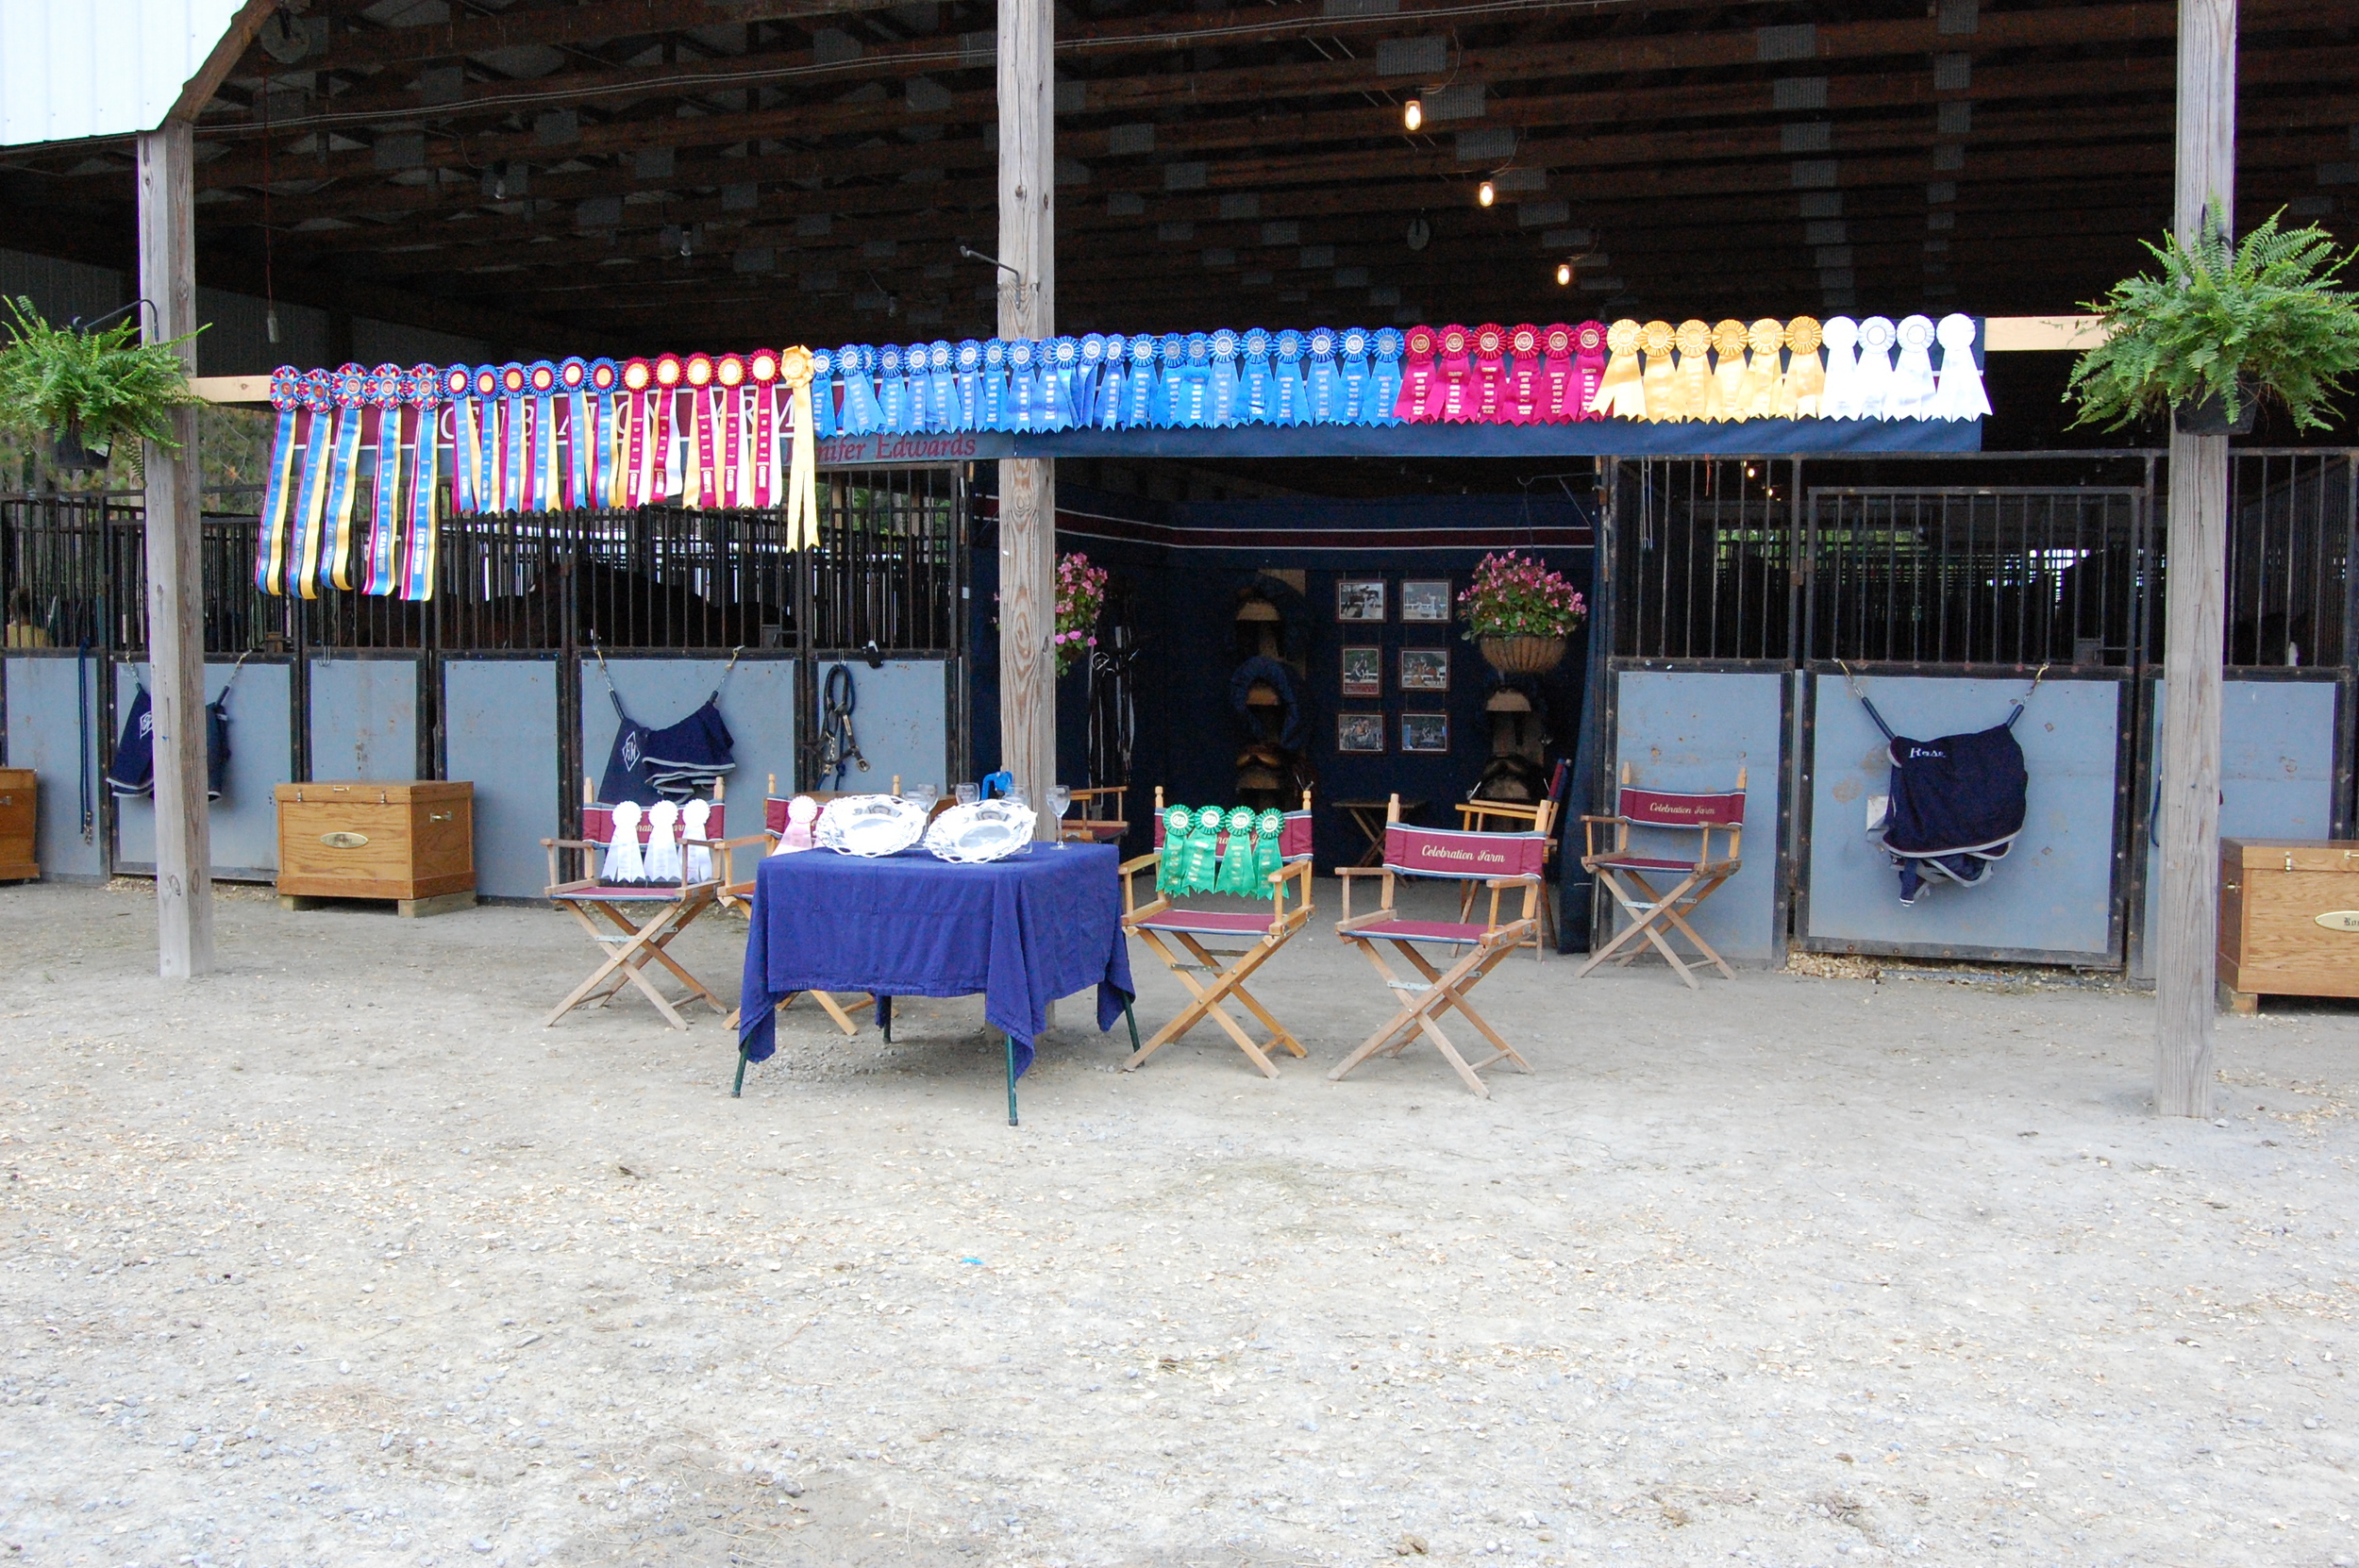 Belleame Farm Horse Show